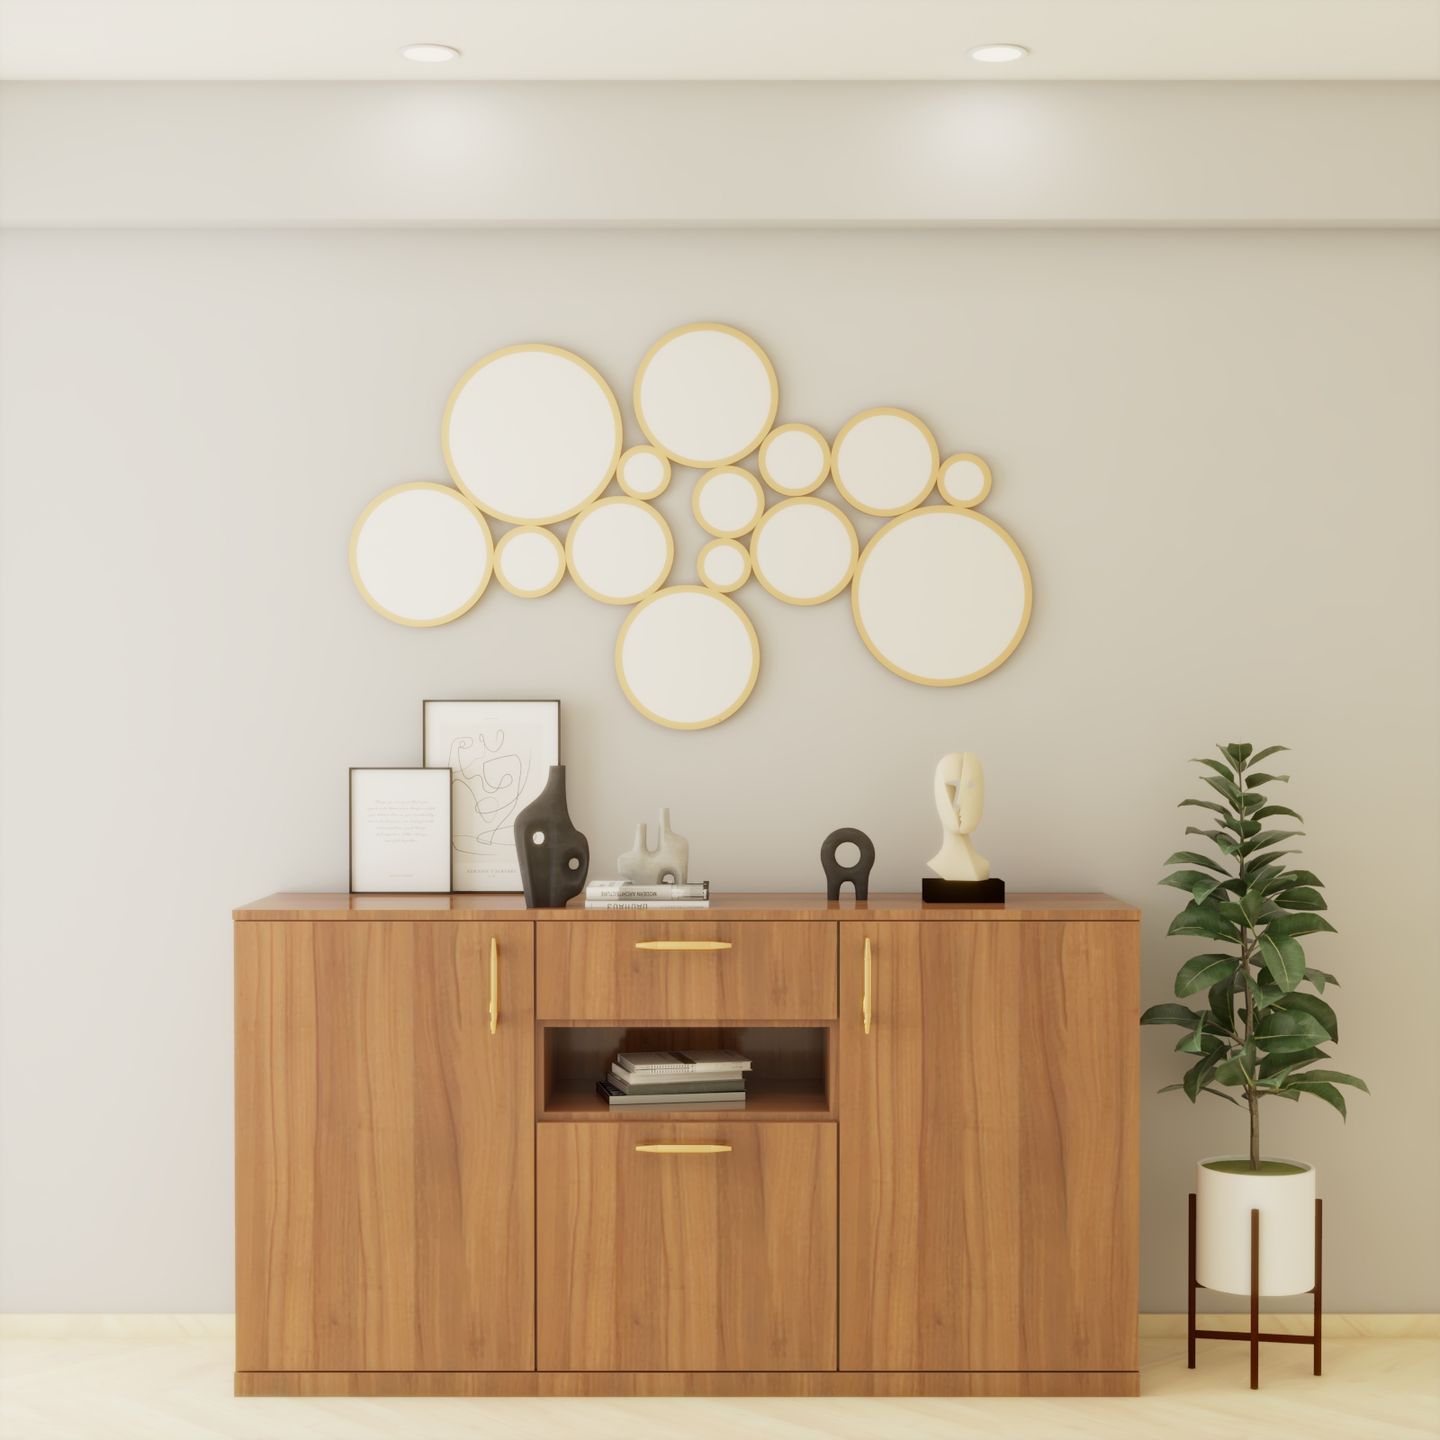 Foyer Design With Planter - Livspace